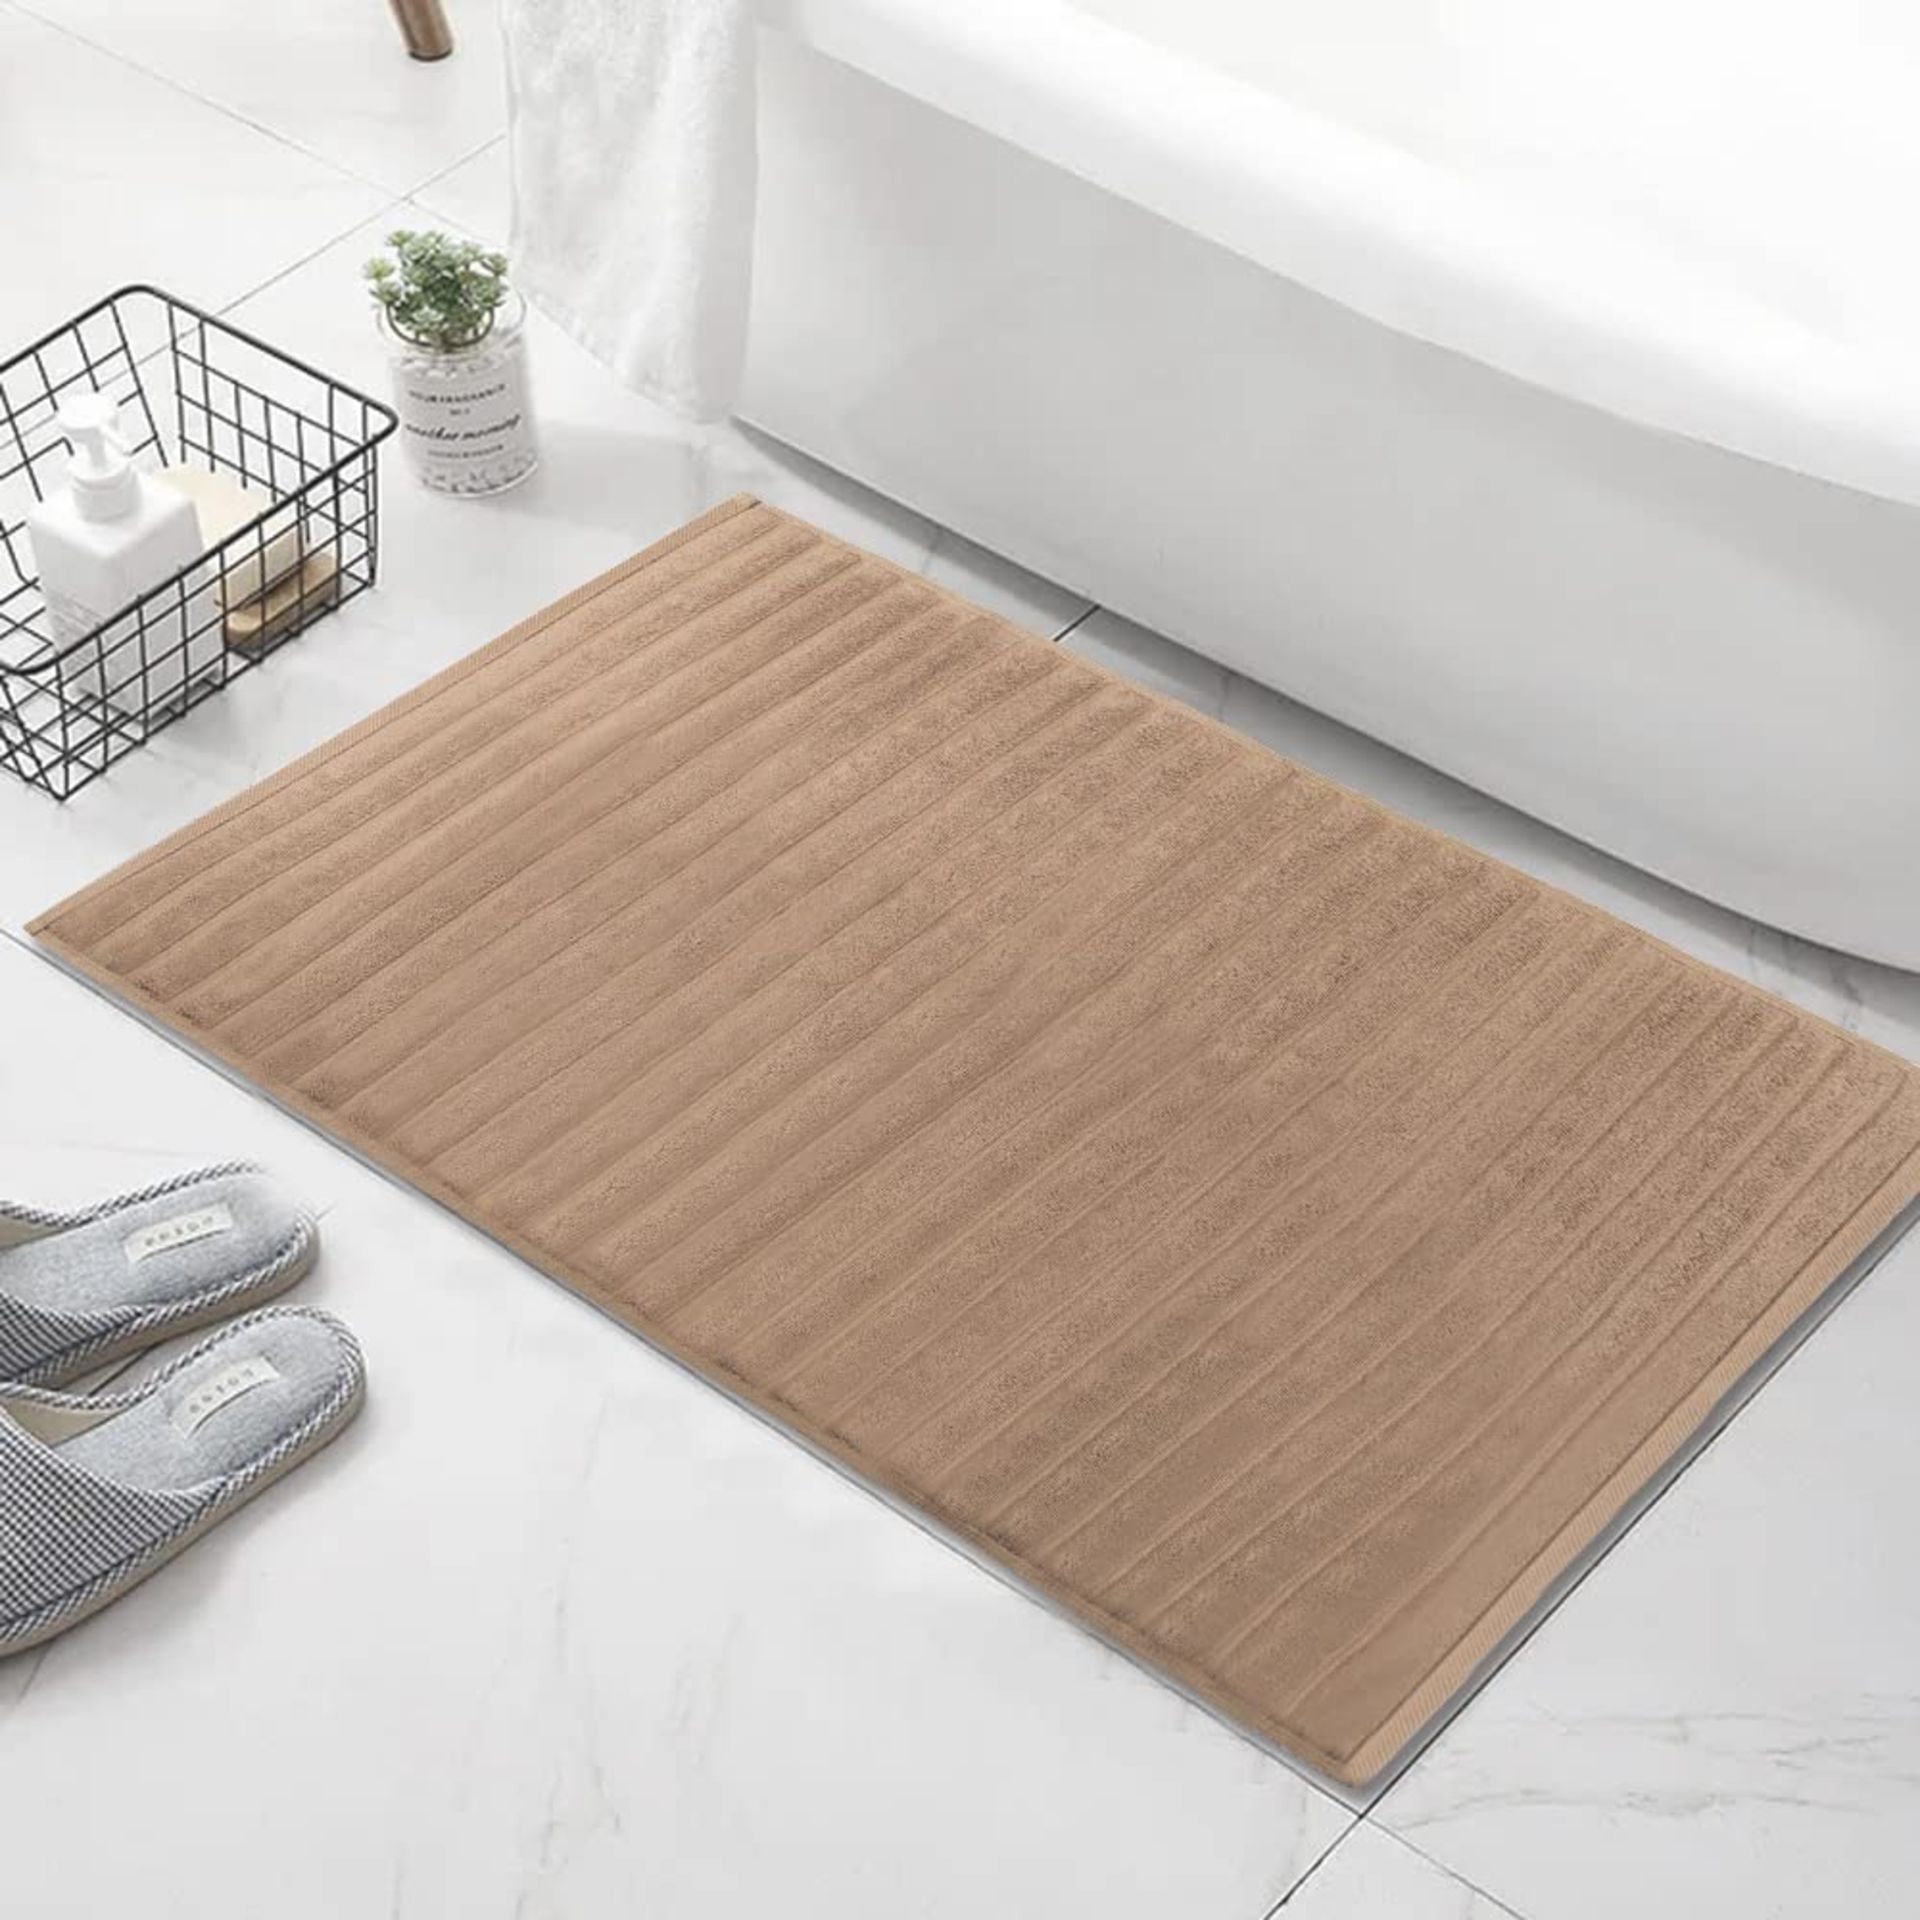 RRP - £7.99 Yoleo Cotton Bath Mat Thick Hotel Floor Towel for Bathroom Floor Washable 50x80 CM Carpe